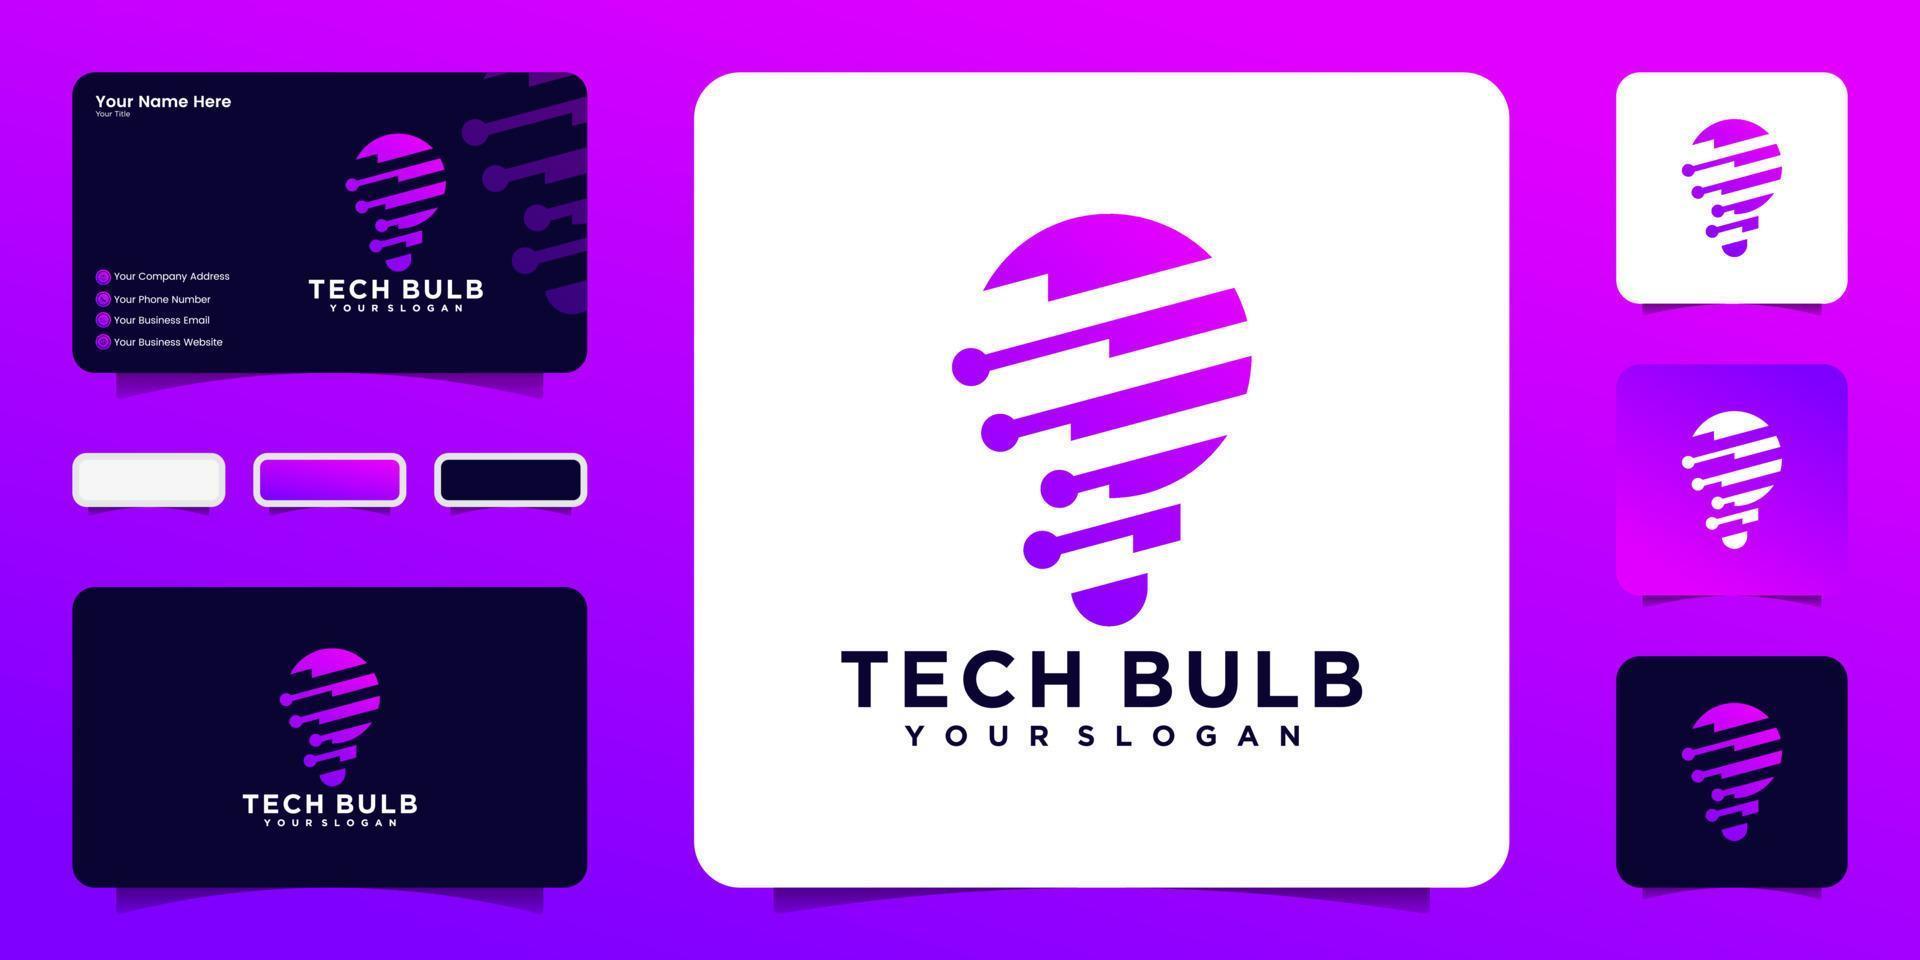 Modern tech bulb logo designs concept pixel and business card vector